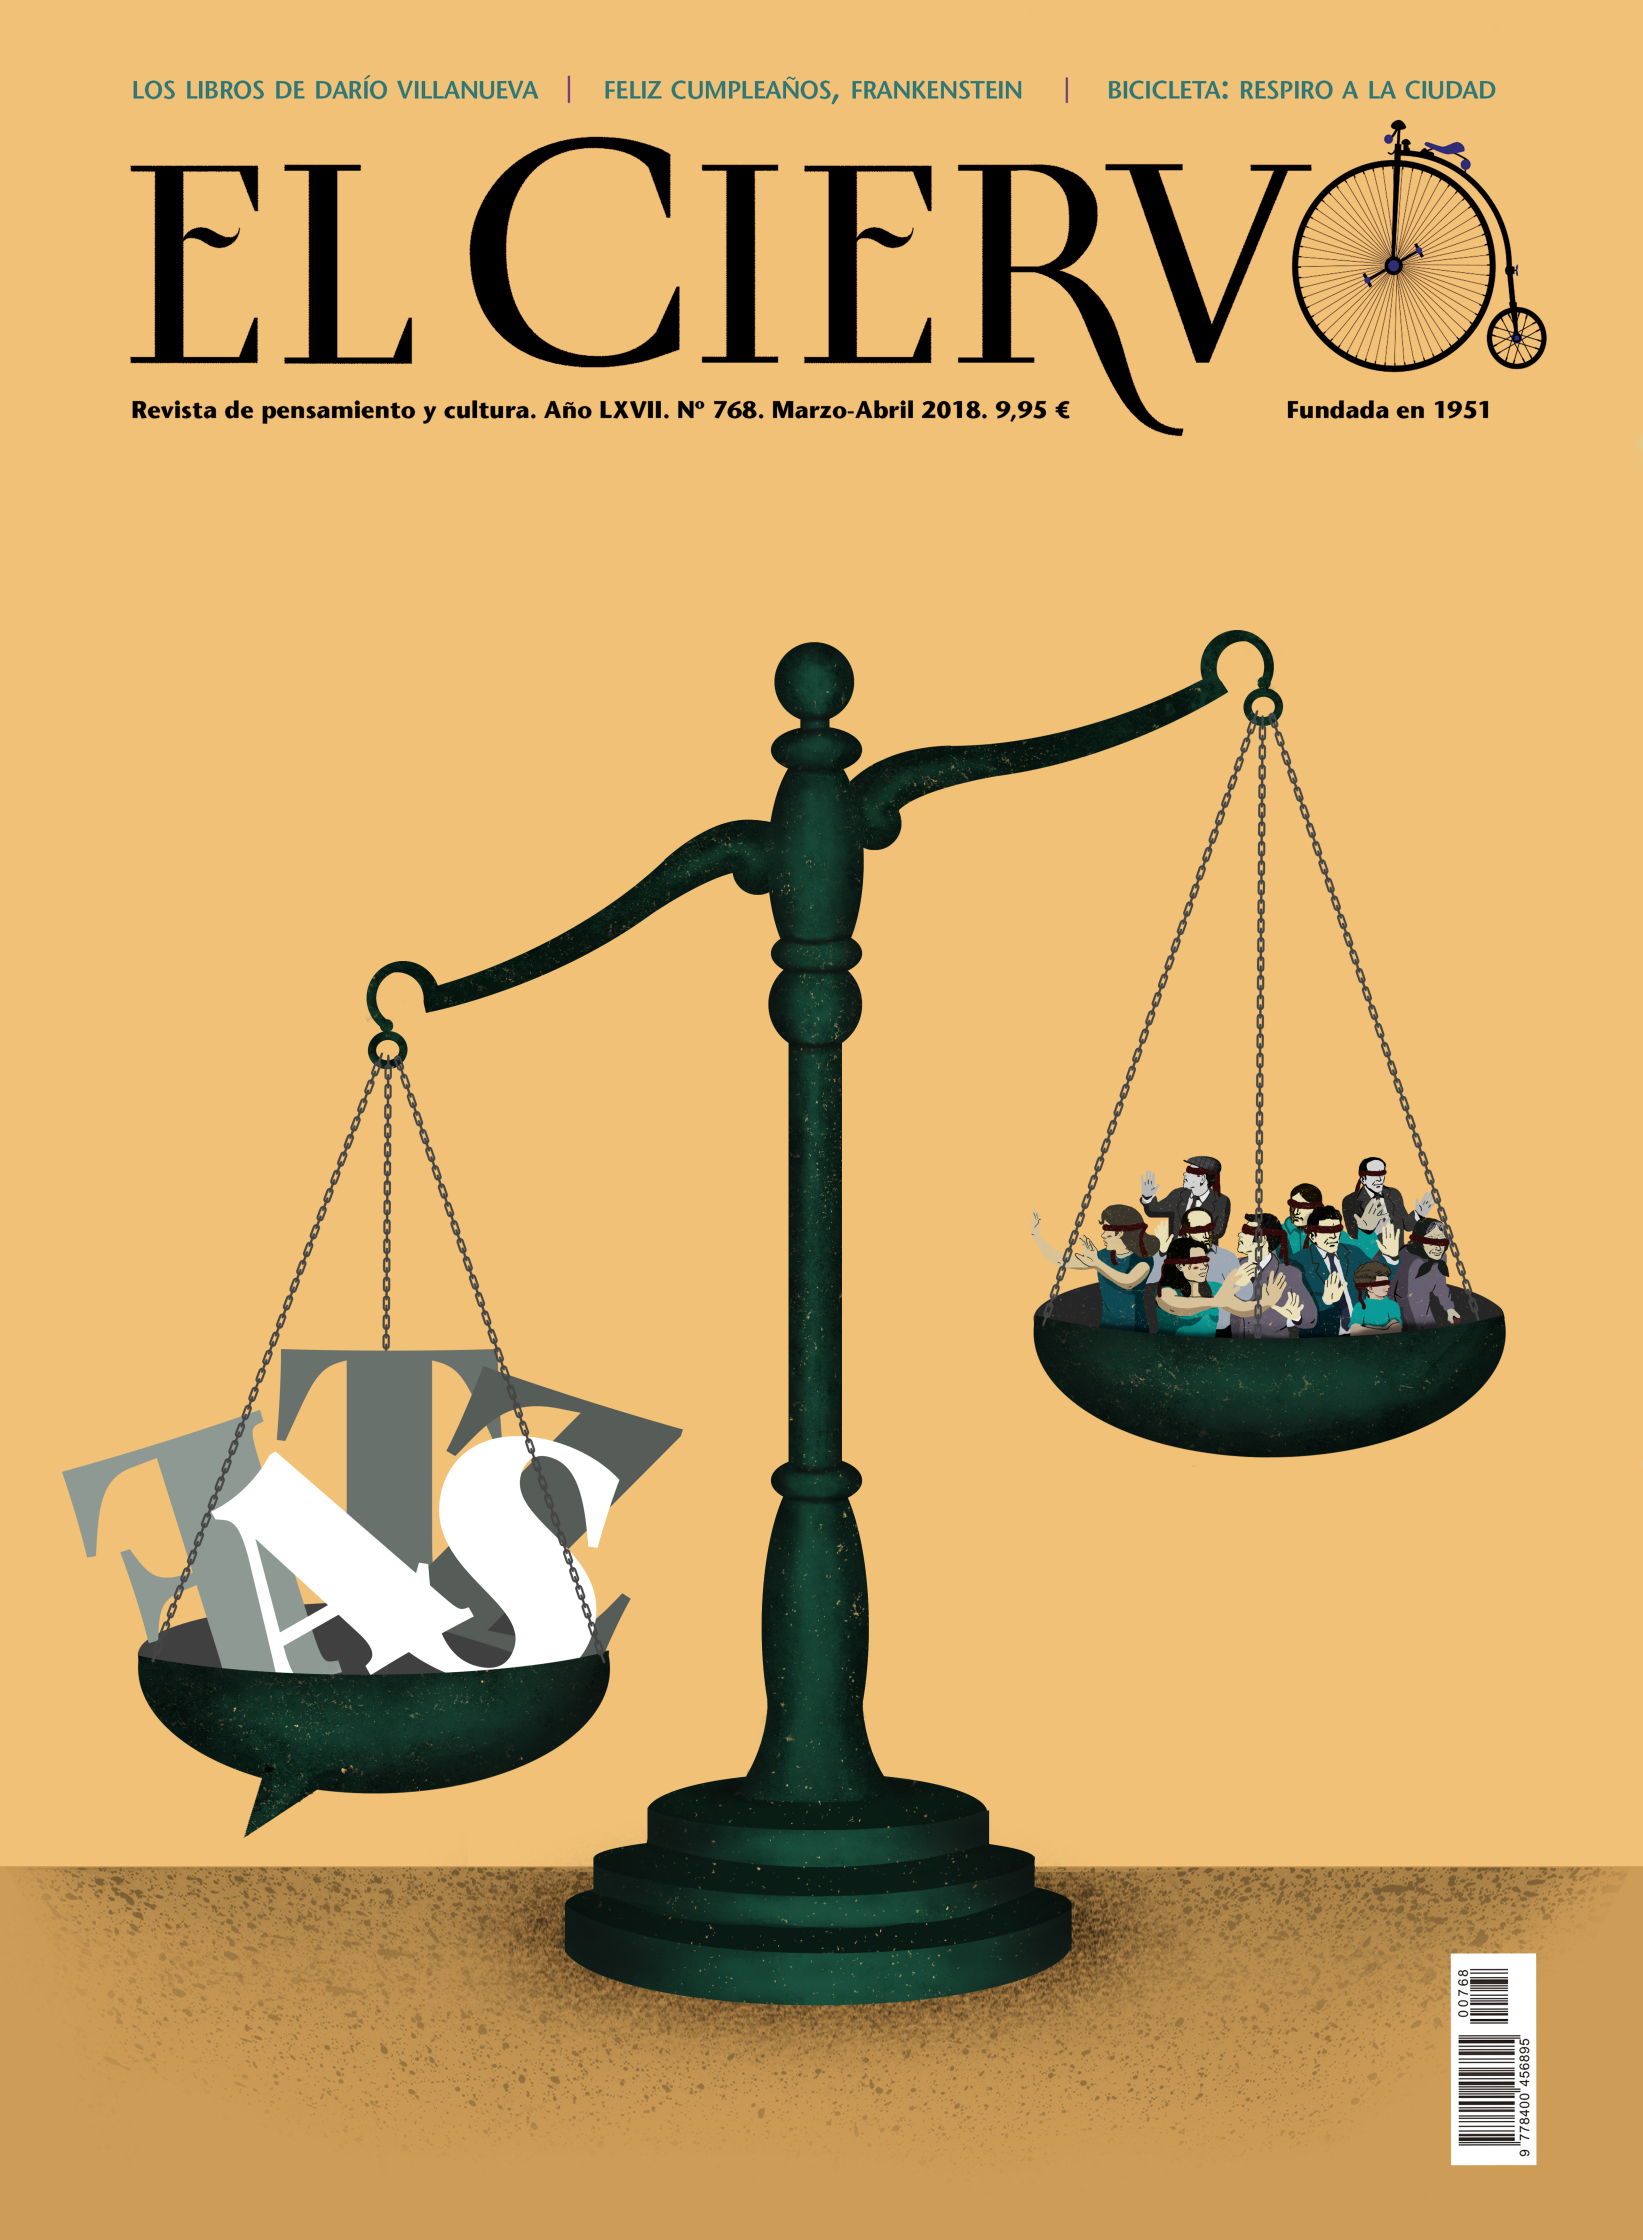 El Ciervo cover - The power of the word.jpg